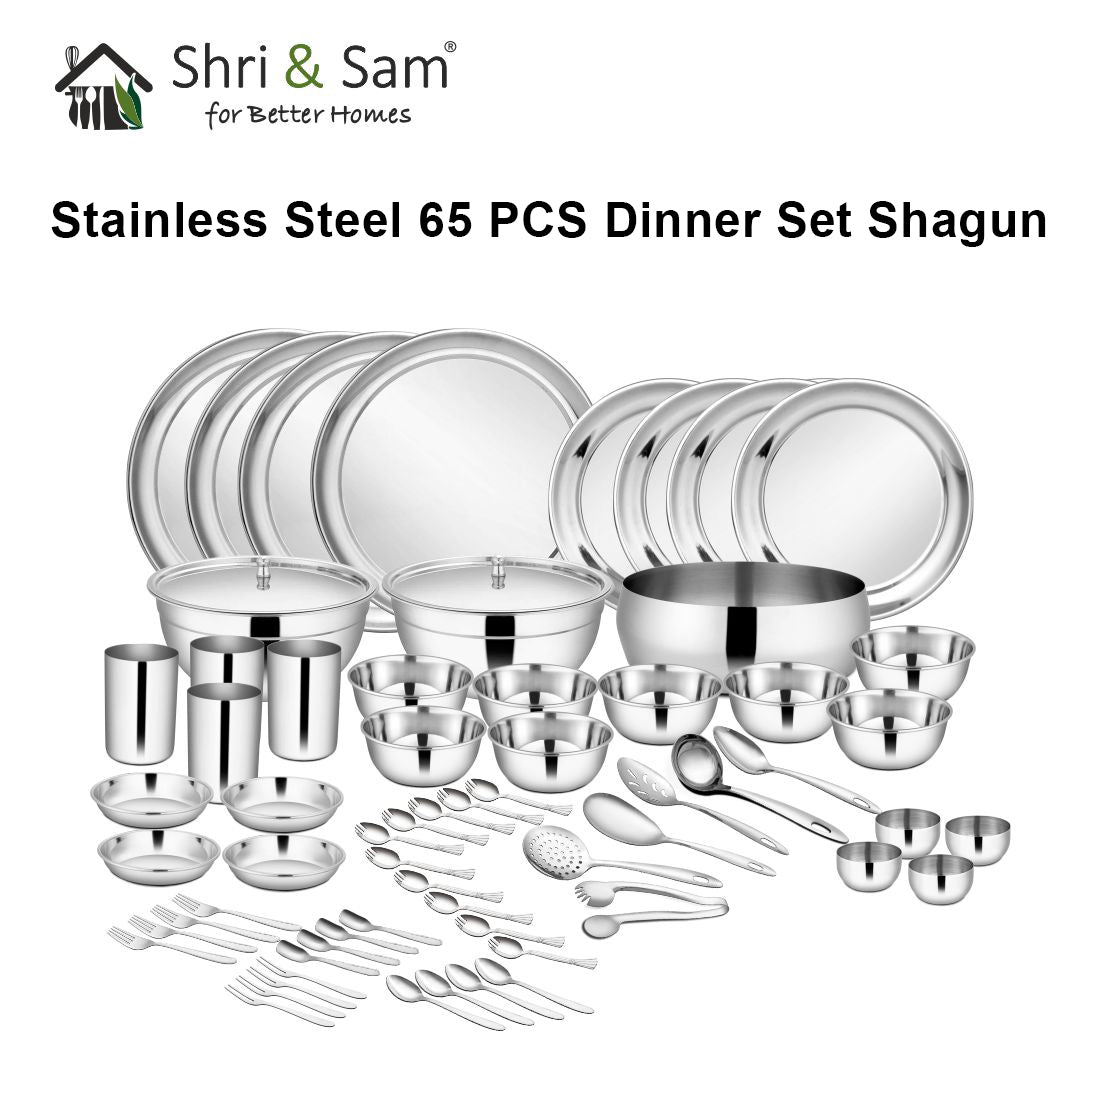 Stainless Steel 65 PCS Dinner Set (4 People) Shagun